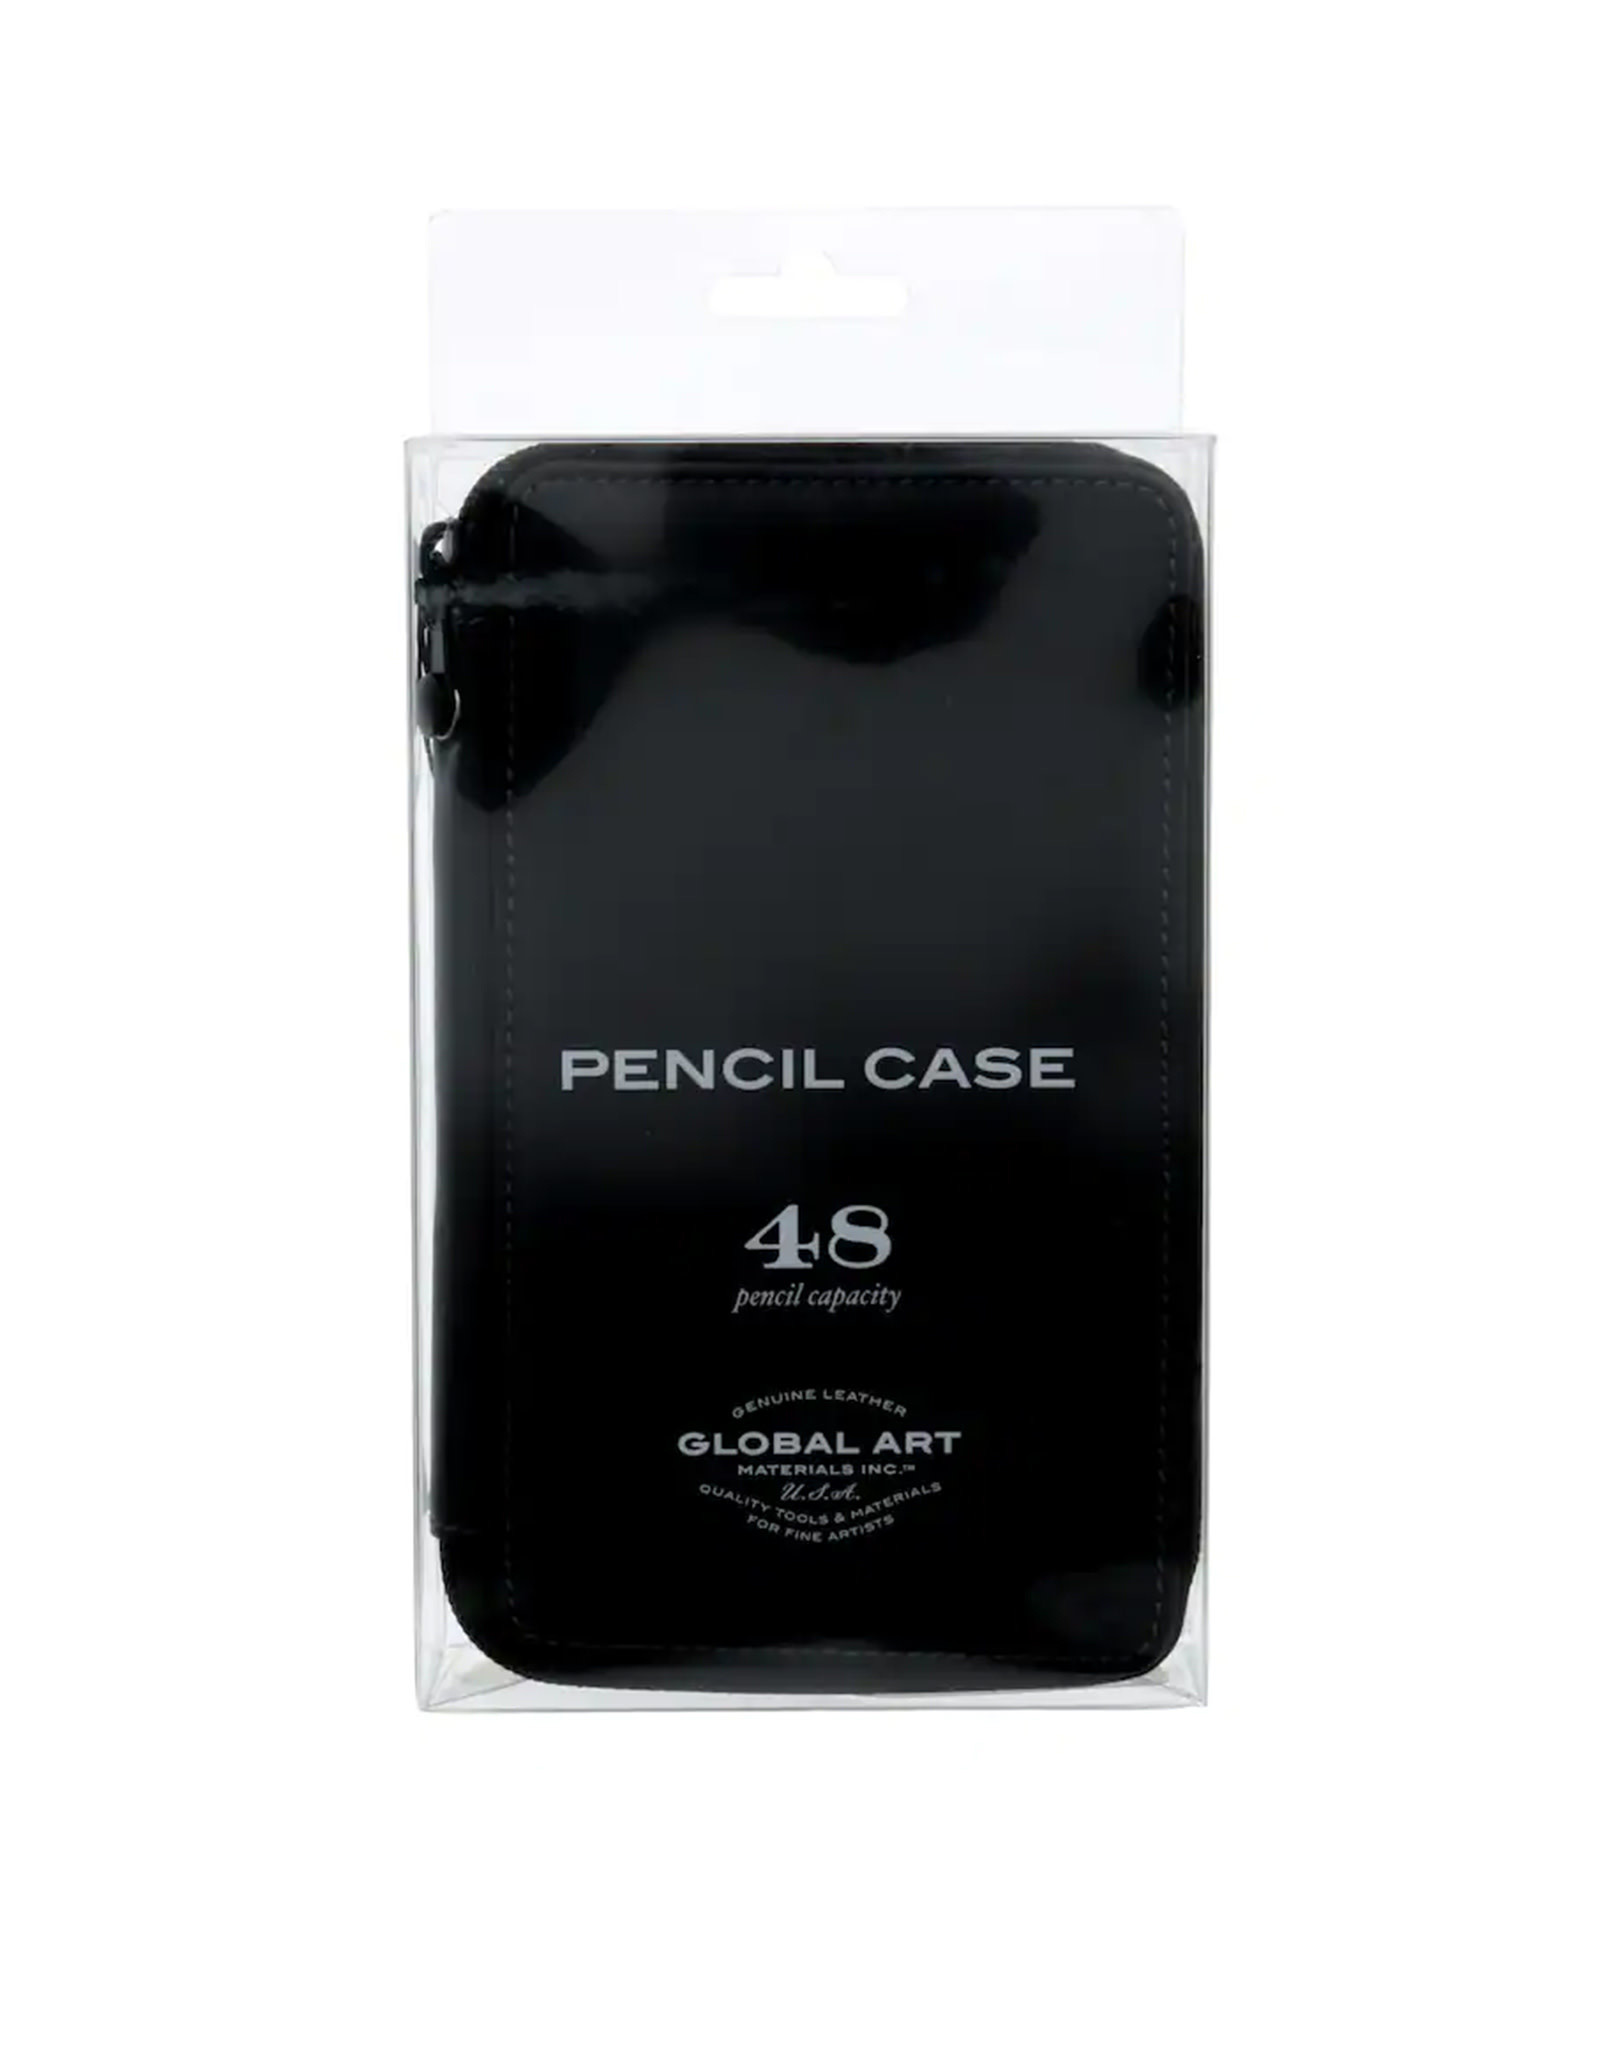 SPEEDBALL ART PRODUCTS Global Art Pencil Case, Genuine Leather, Black, 48 Pencils